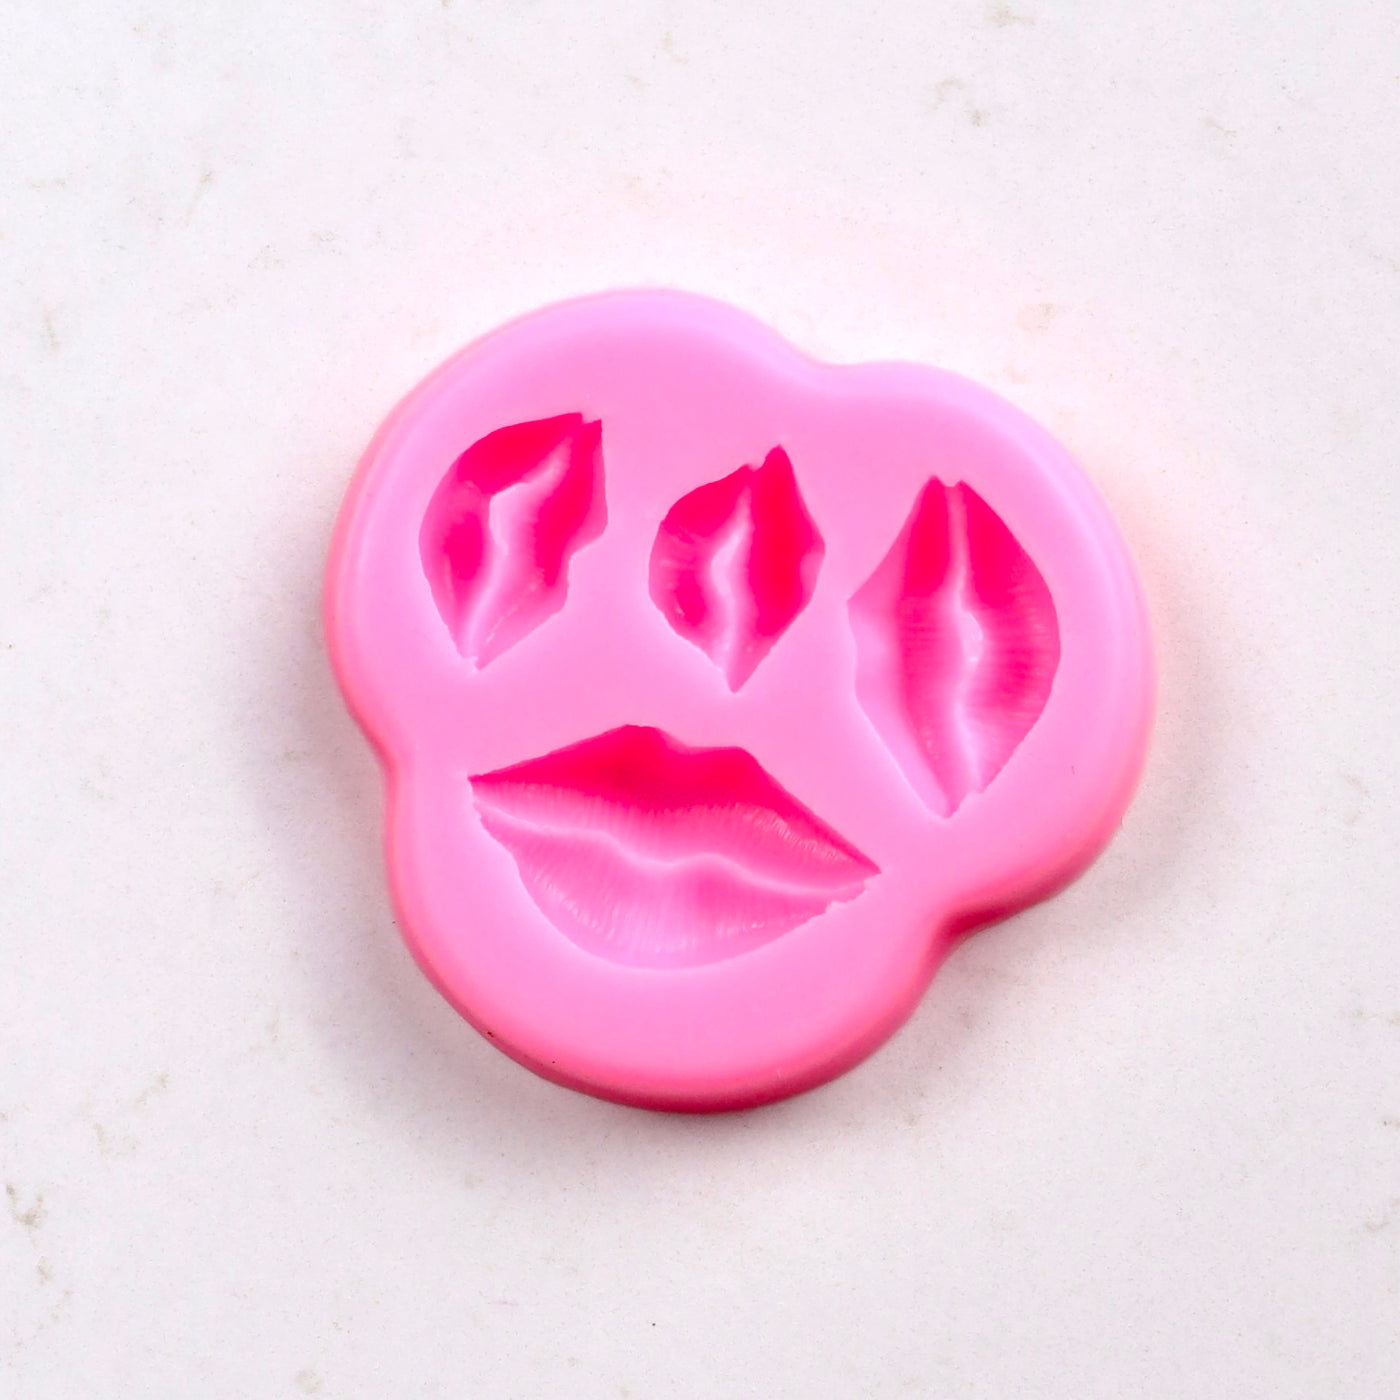 Lips Mold - Small - The Sugar Art, Inc.